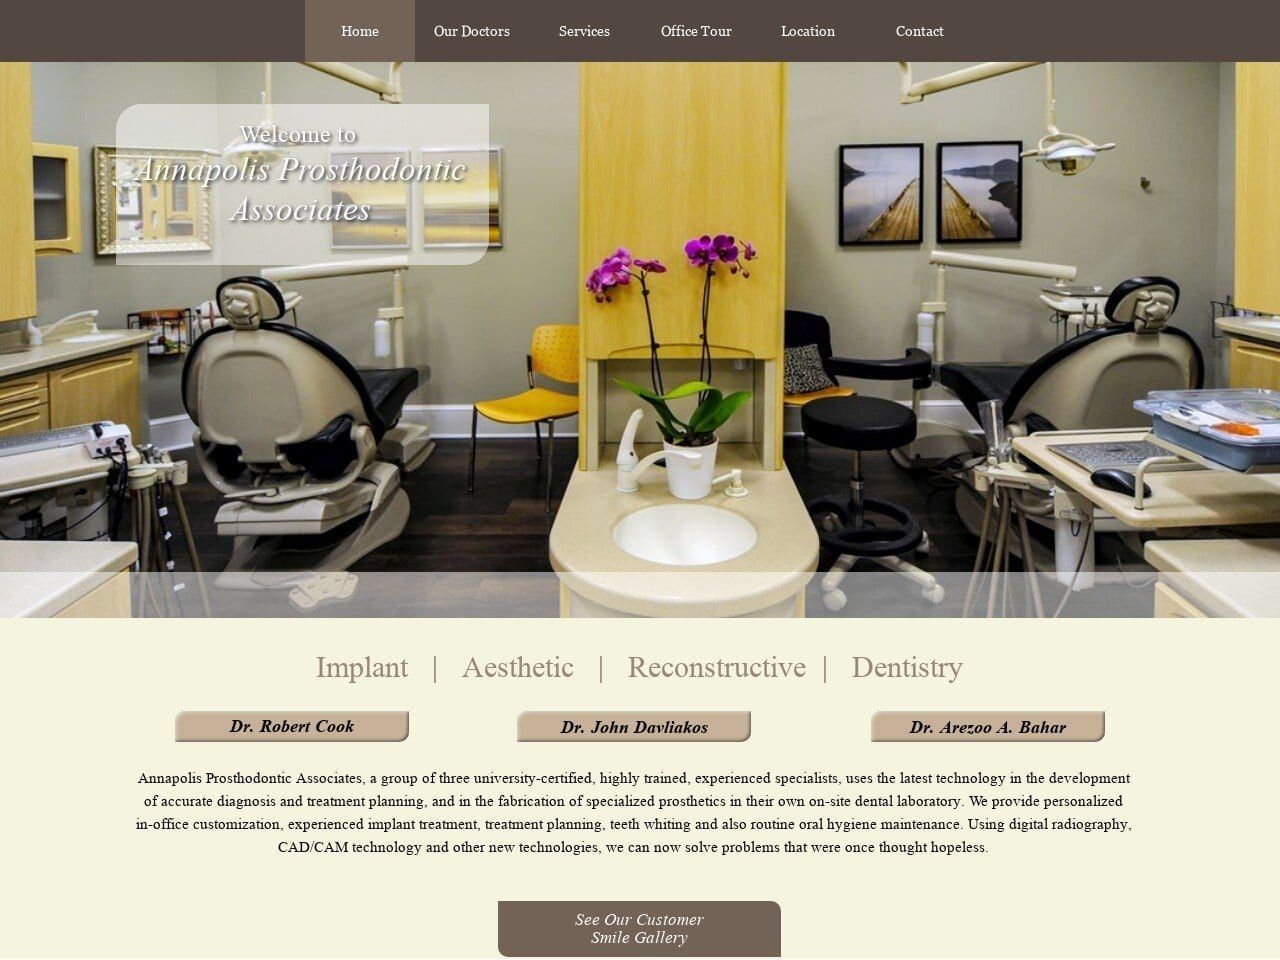 Annapolis Prosthodontic Associates Website Screenshot from apadentistry.net